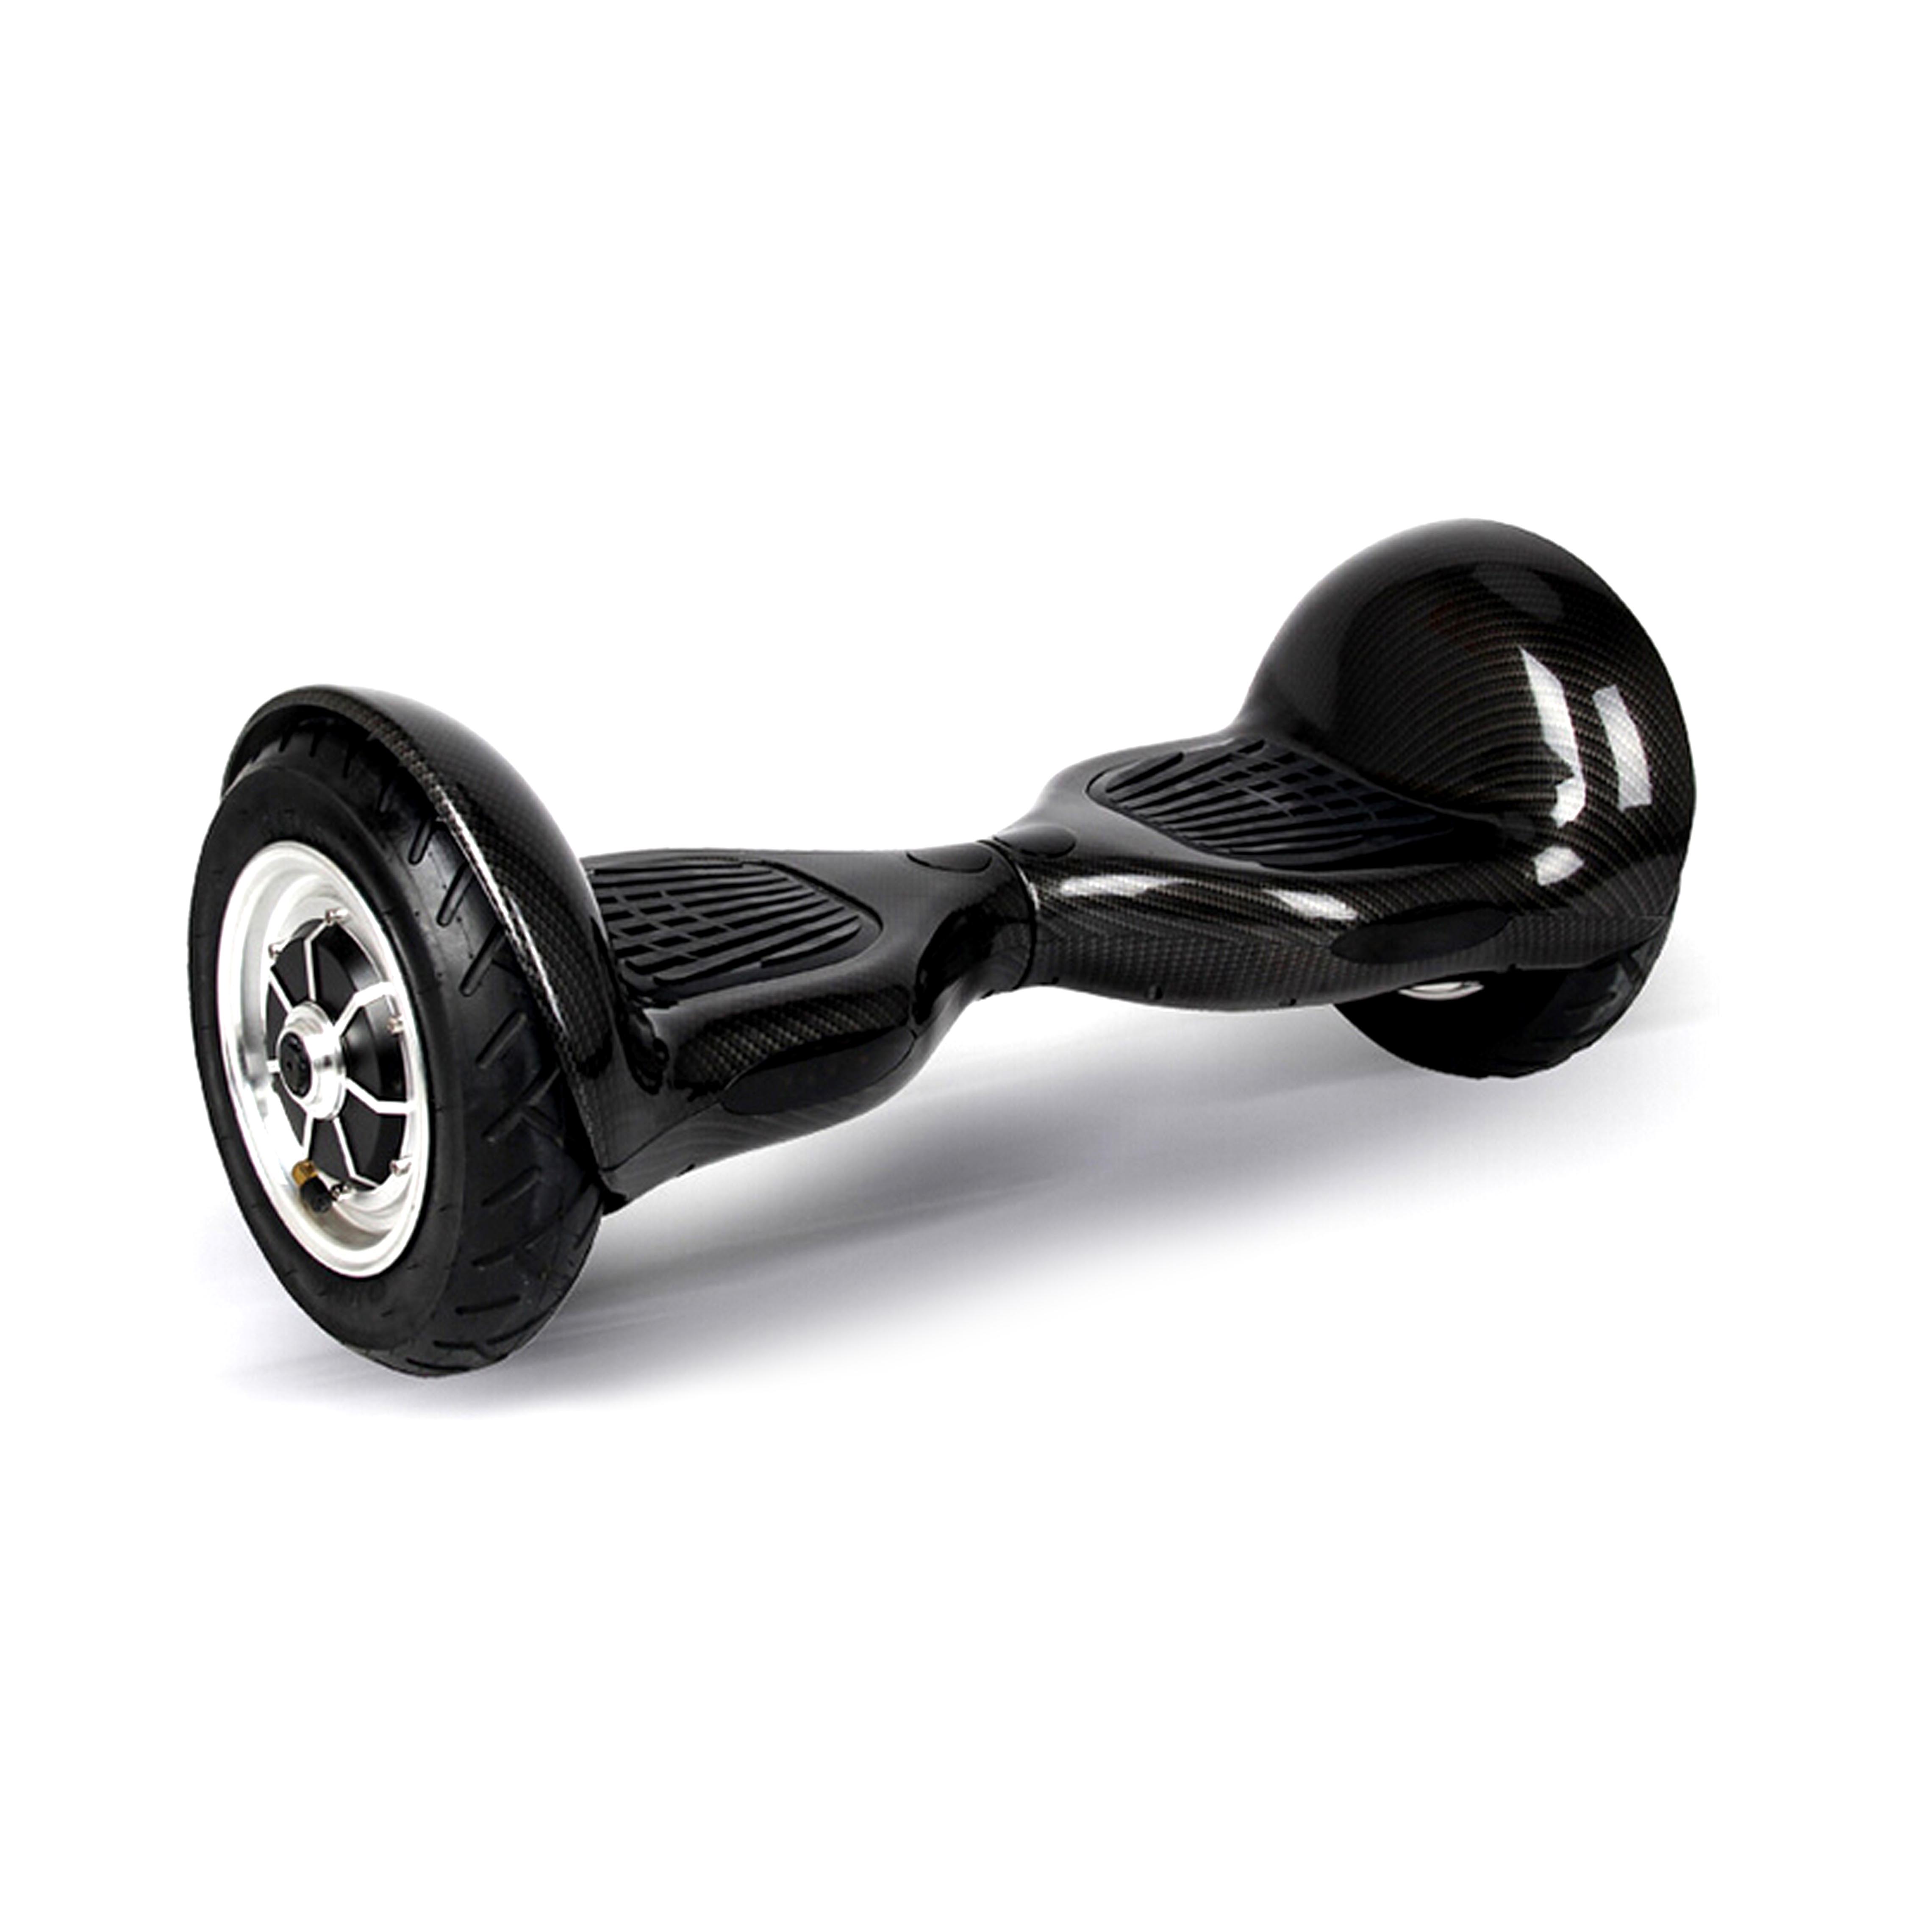 10 inch hoverboard carbon black